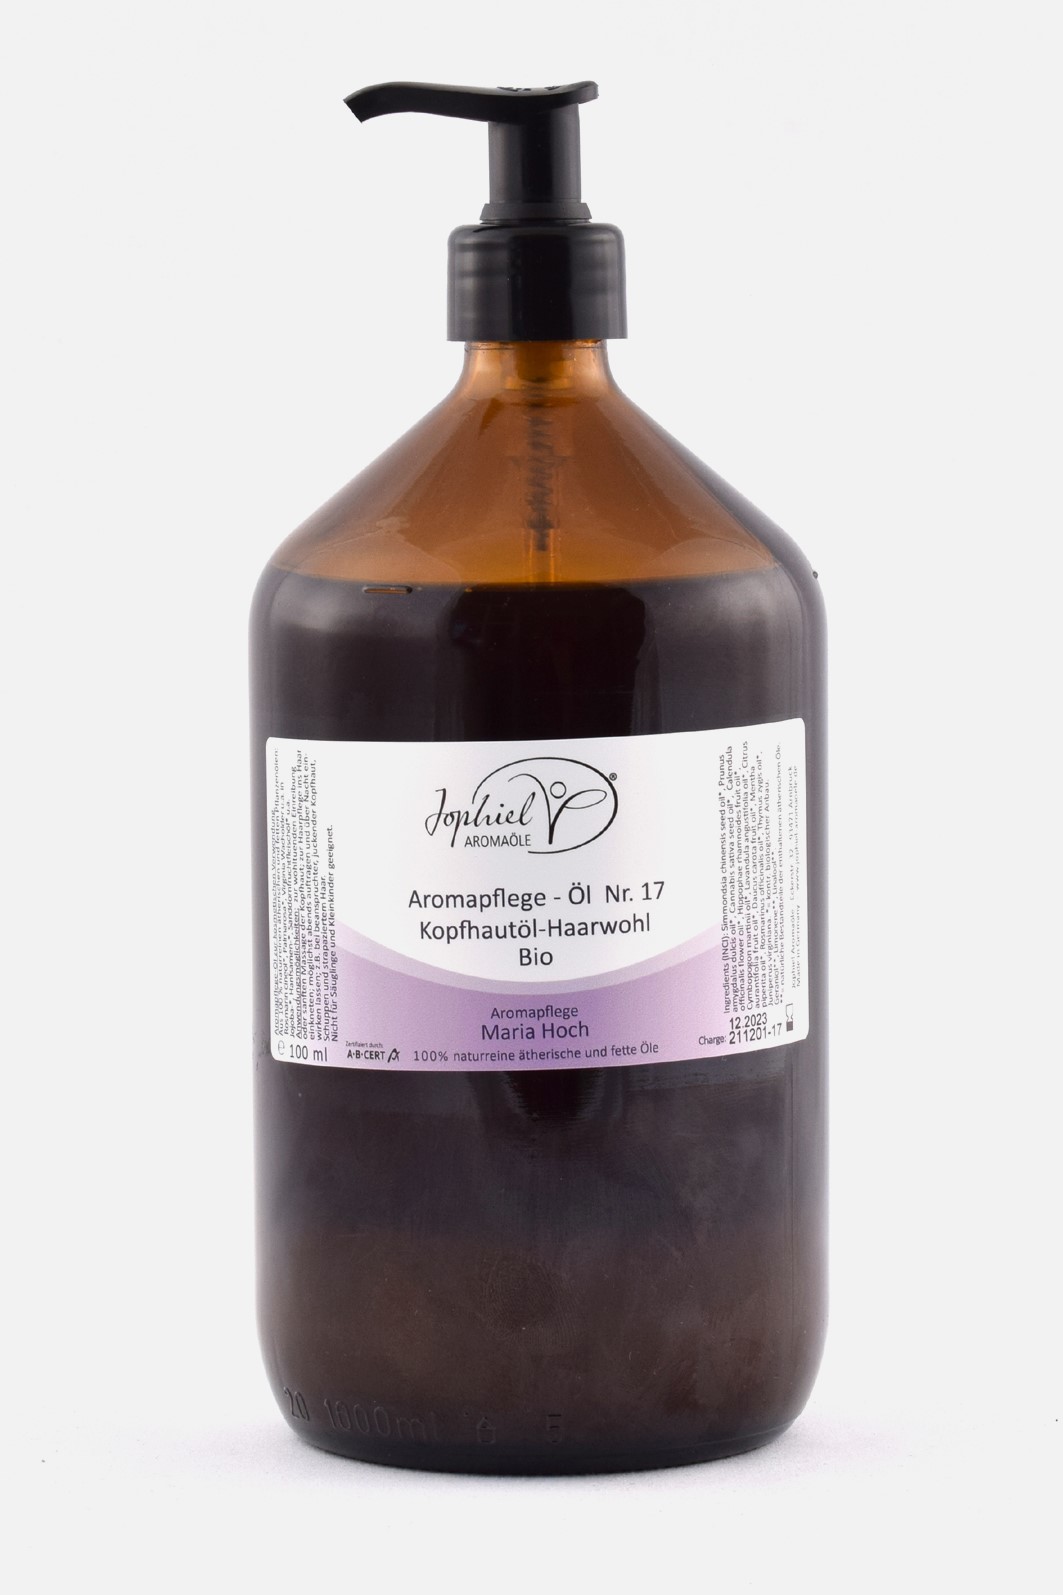 Aromapflege-Öl Nr. 17 Kopfhautöl-Haarwohl Bio 1000 ml